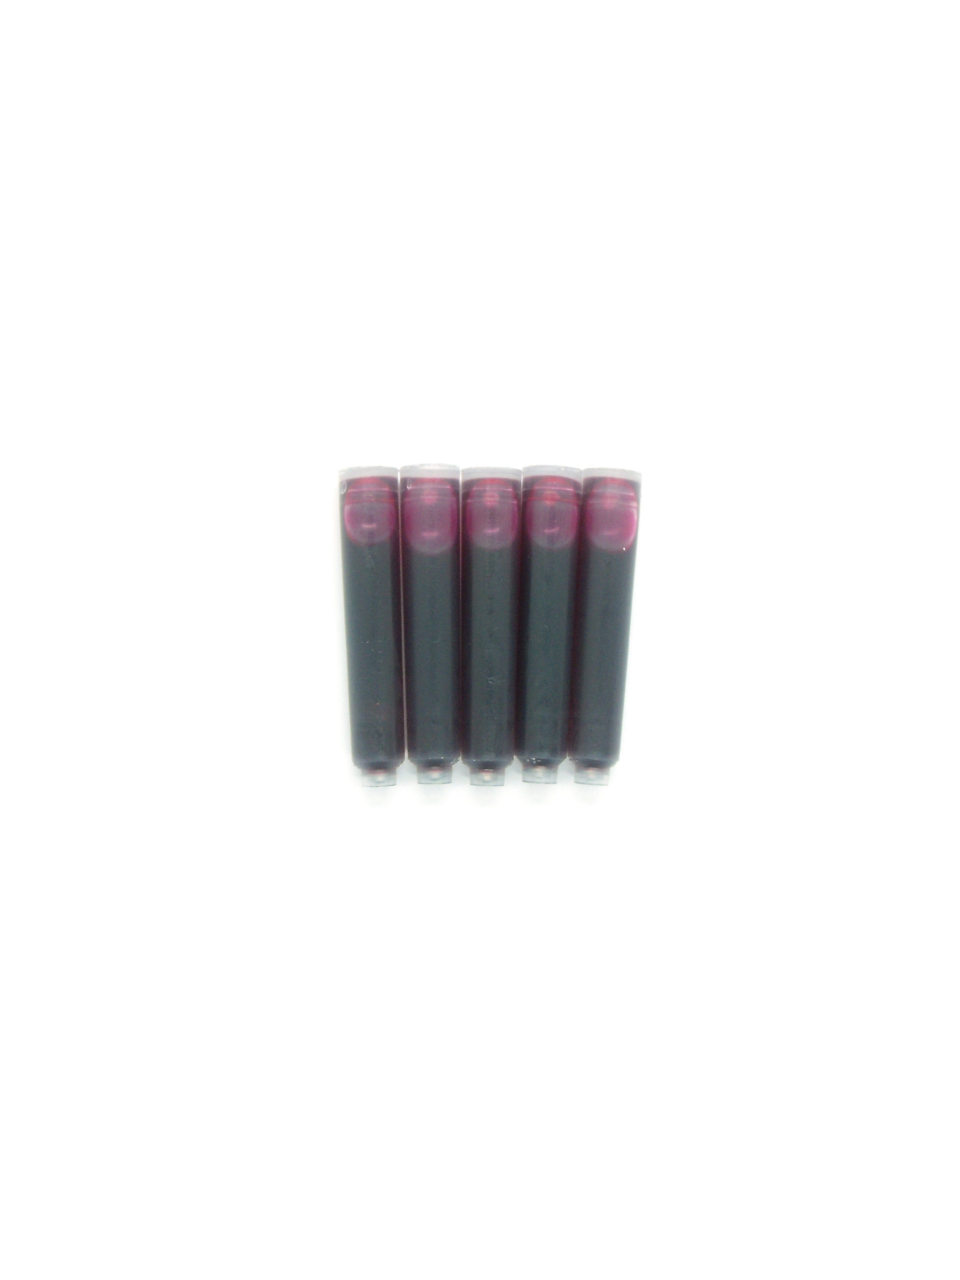 PenConverter Ink Cartridges For Taccia Fountain Pens (Pink)